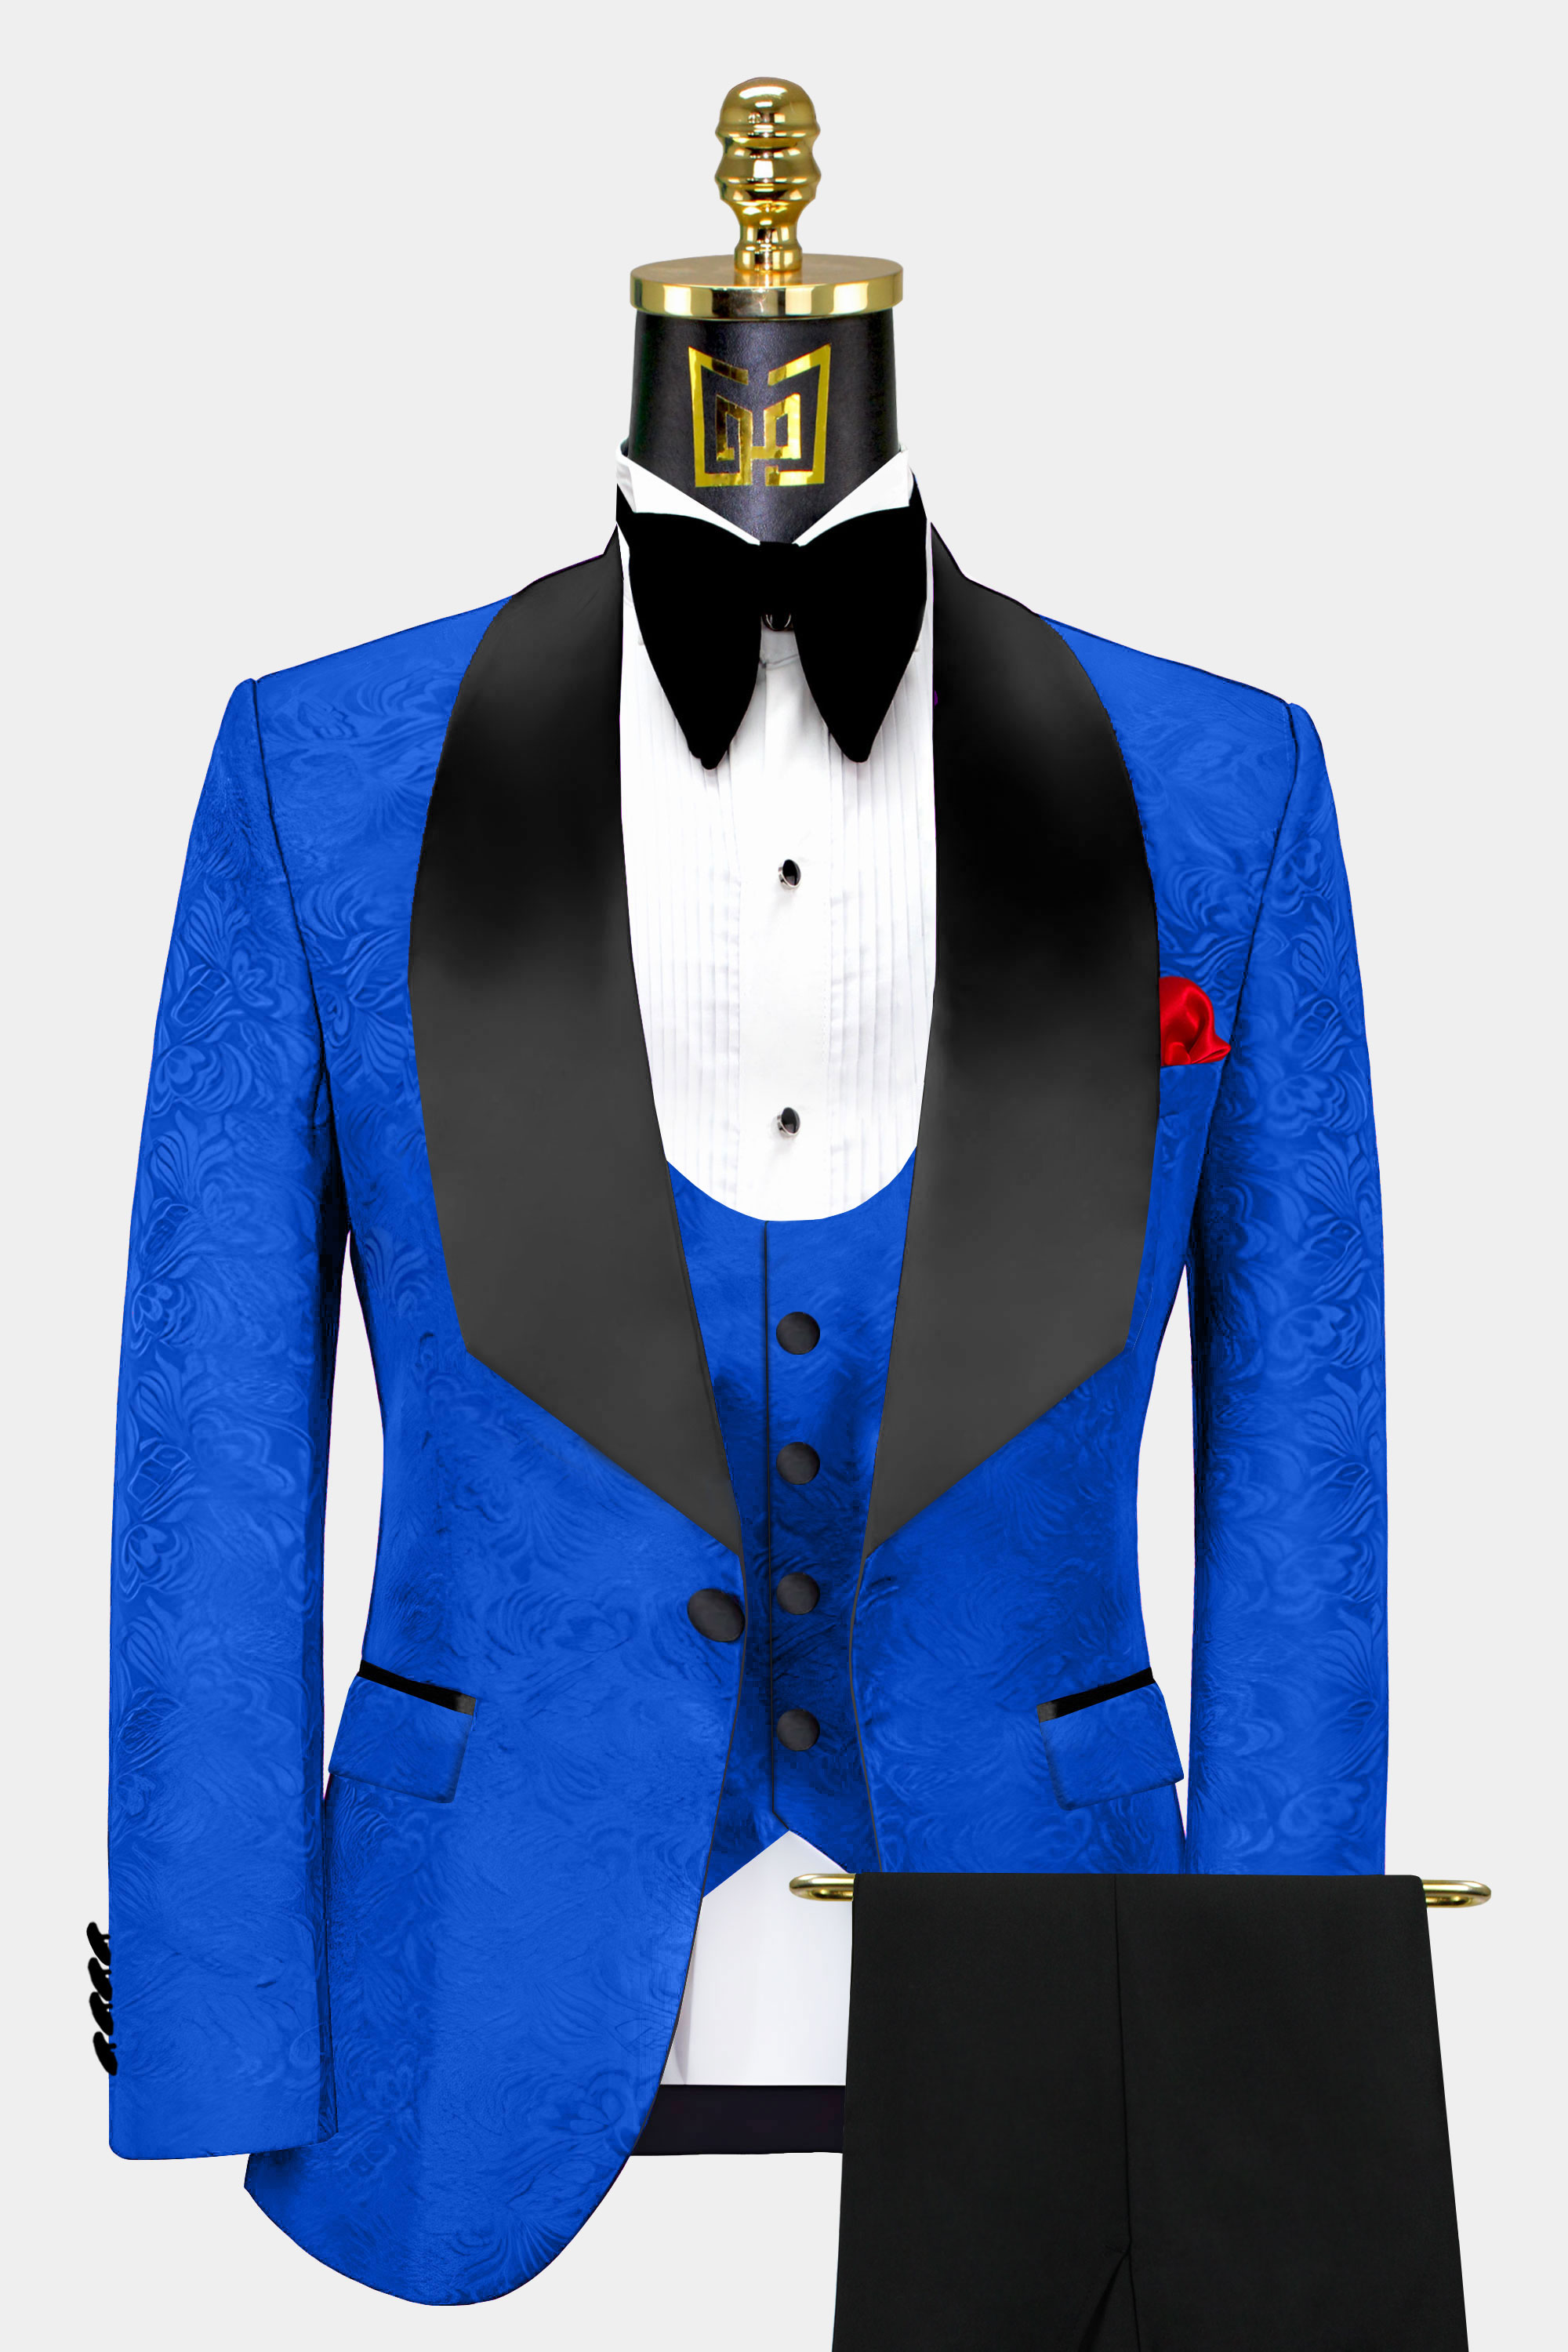 Royal Blue and Black Tuxedo Suit | Gentleman's Guru